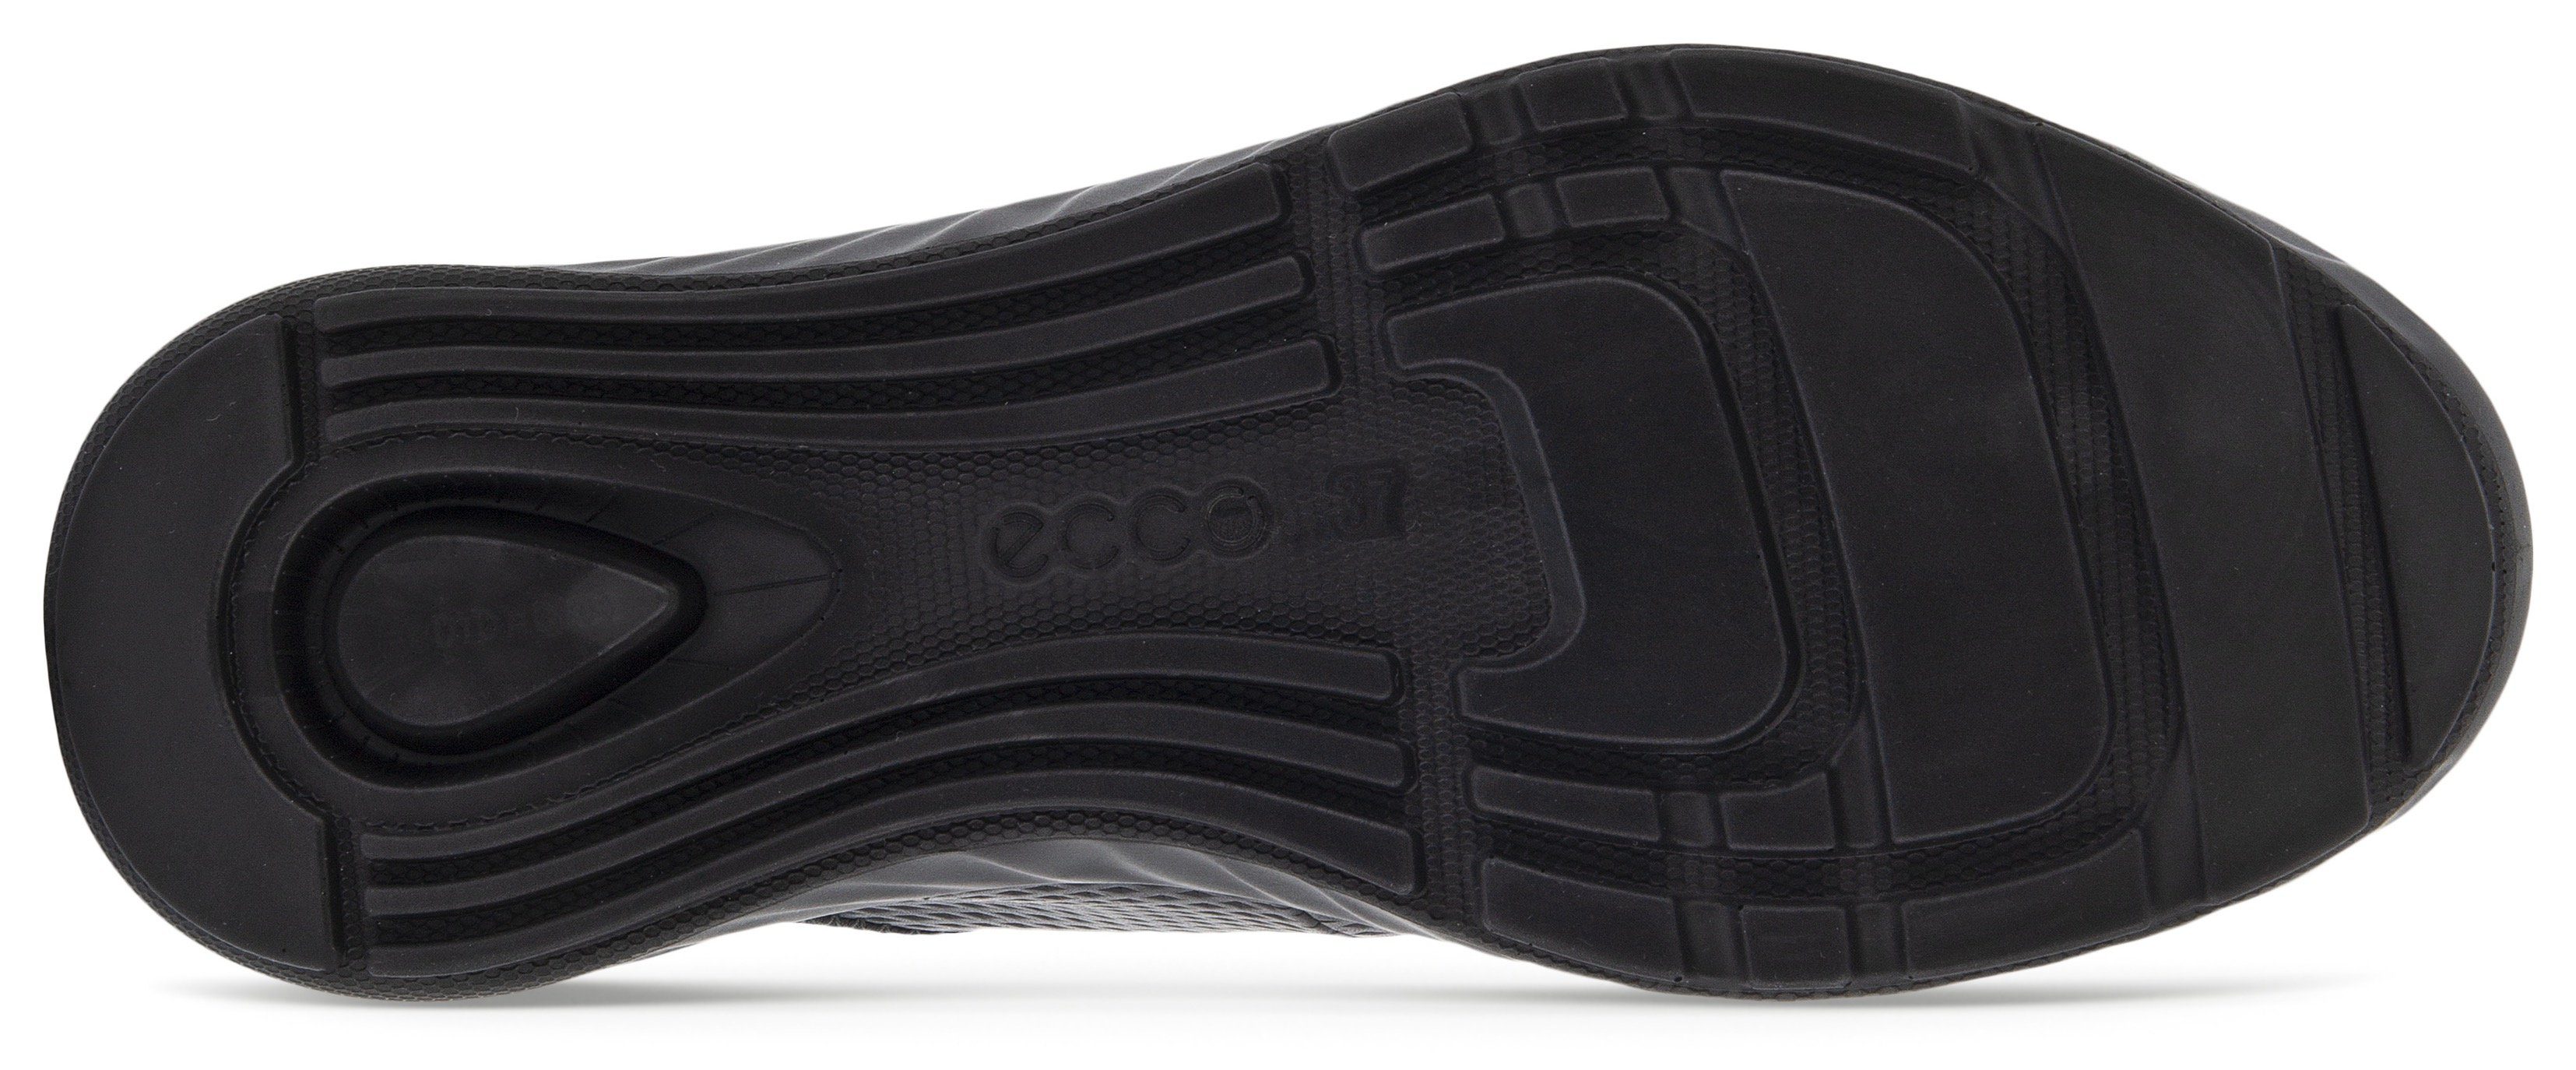 schwarz weiß Ecco Look in ATH-1FW Sneaker sportivem